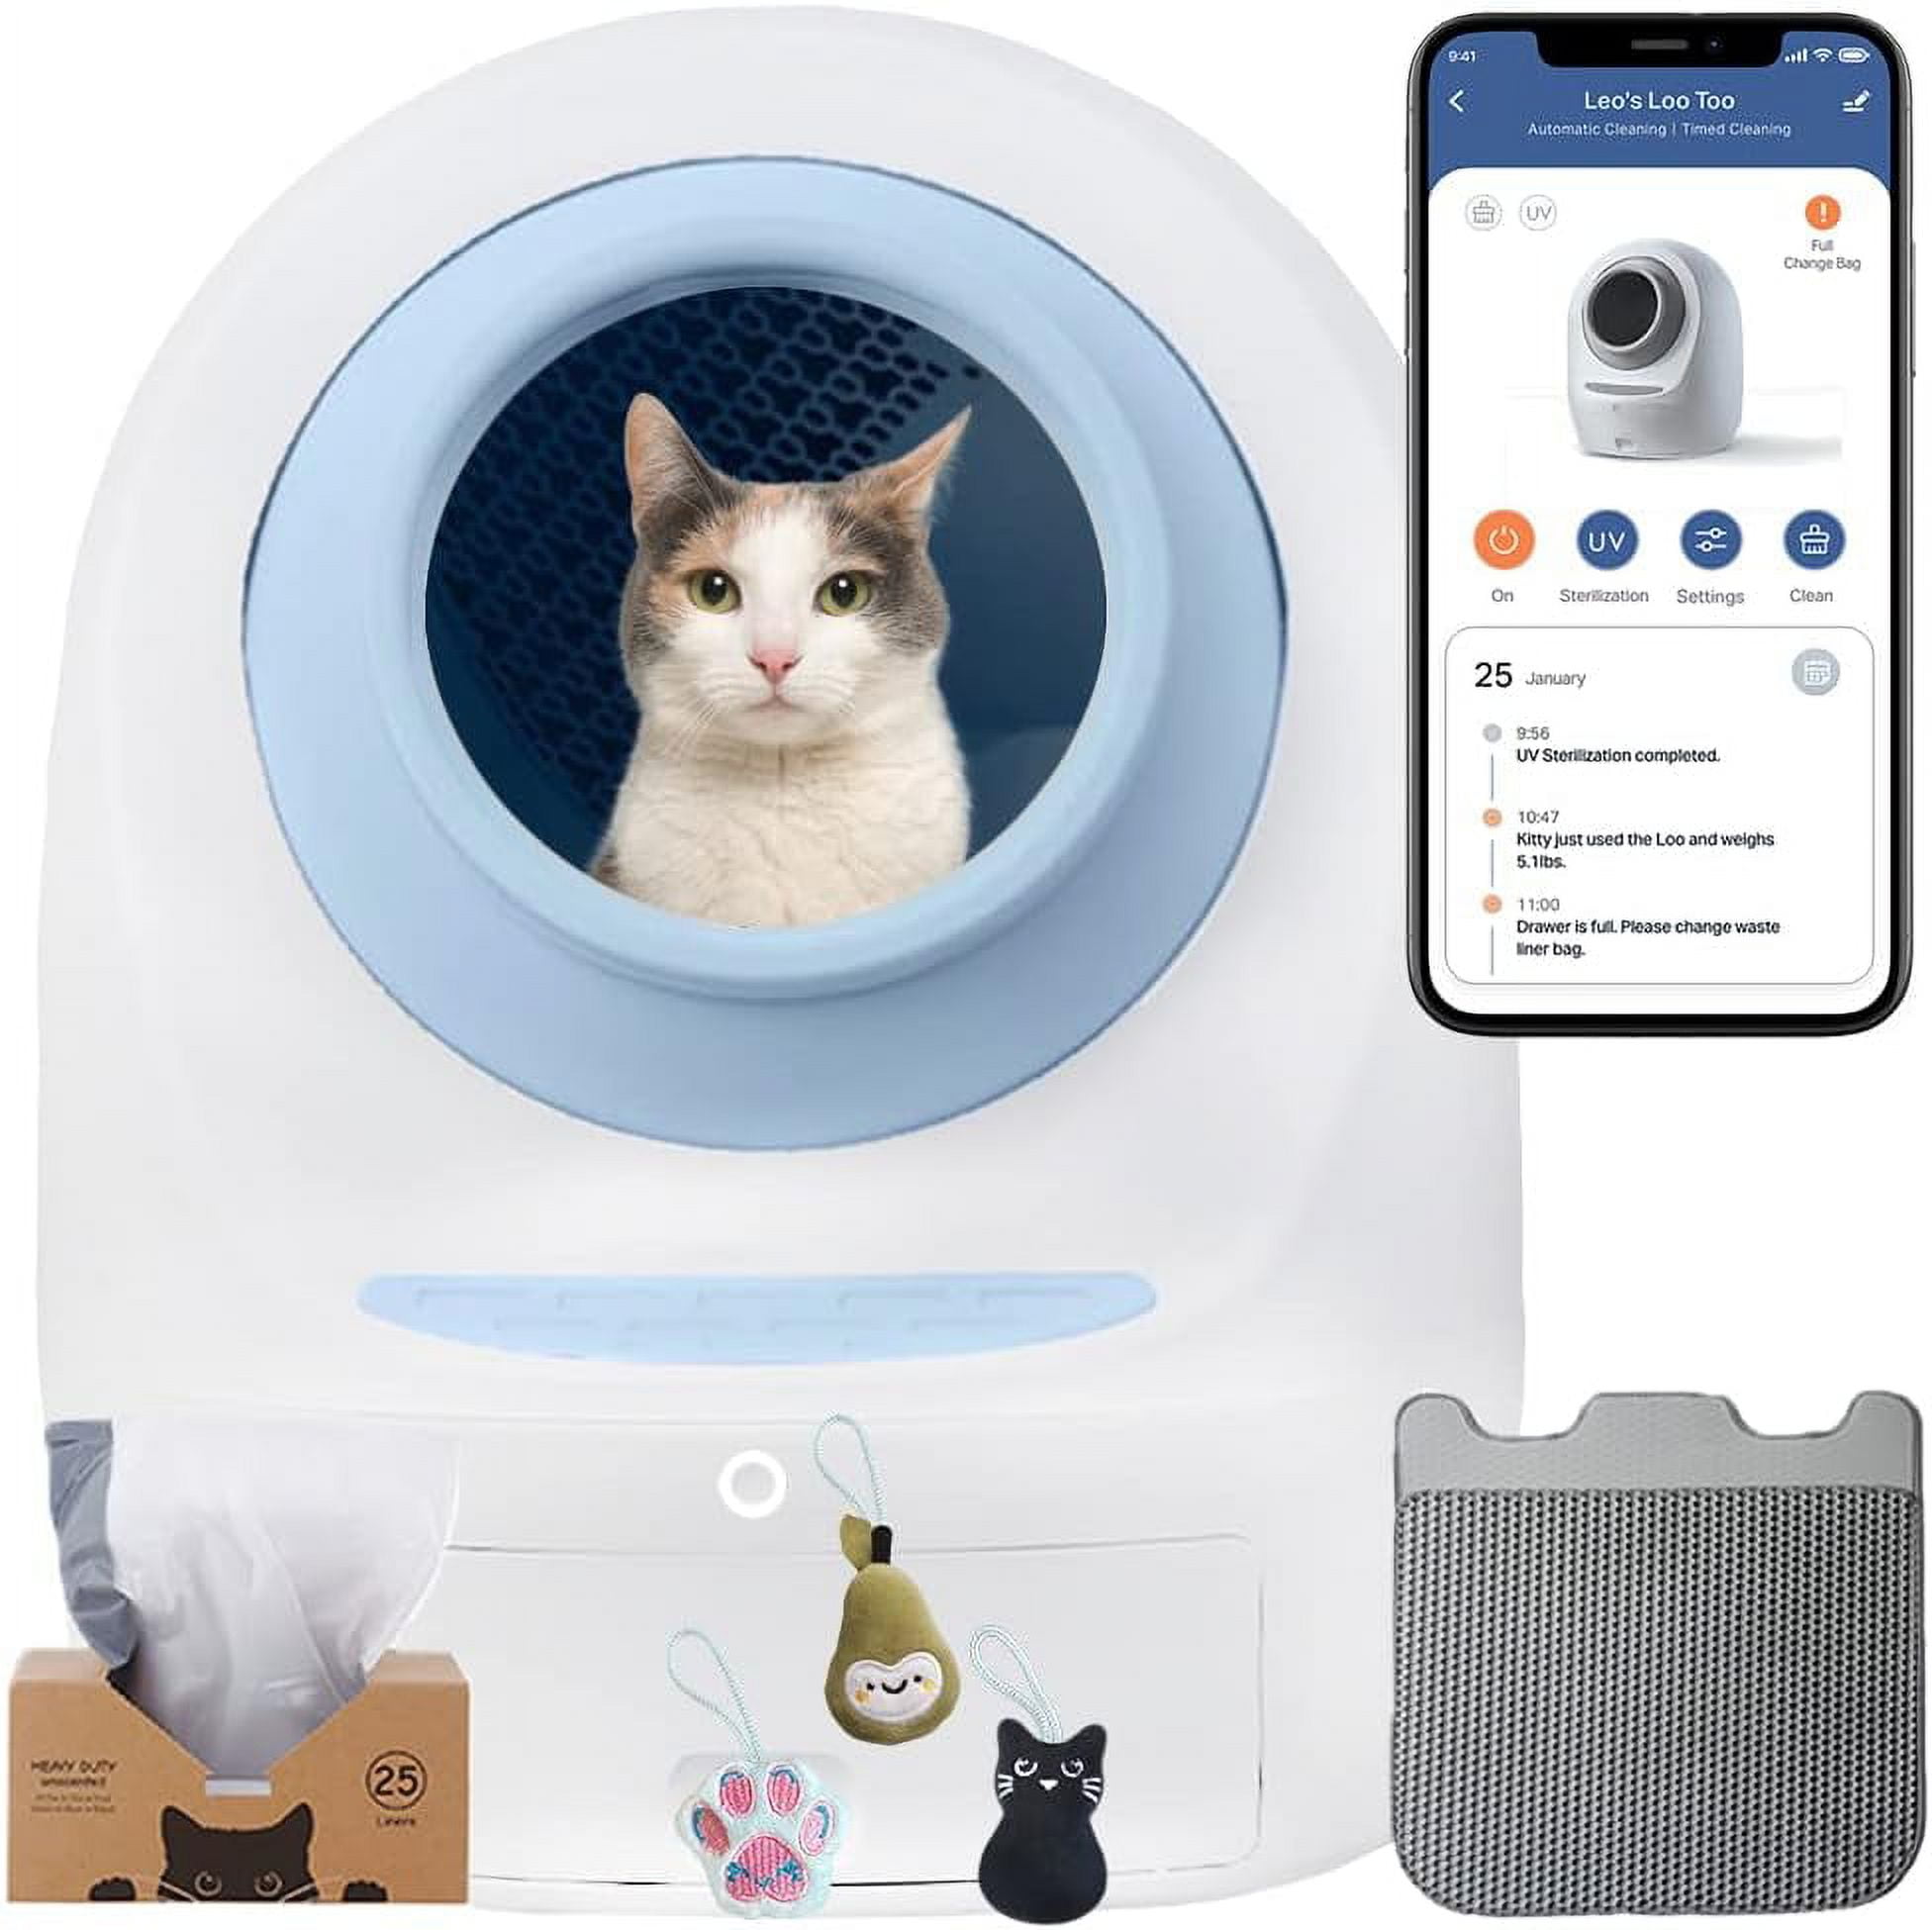 Smart Home & Kitchen Appliances, Cat Care Solutions – VIVIDMOO